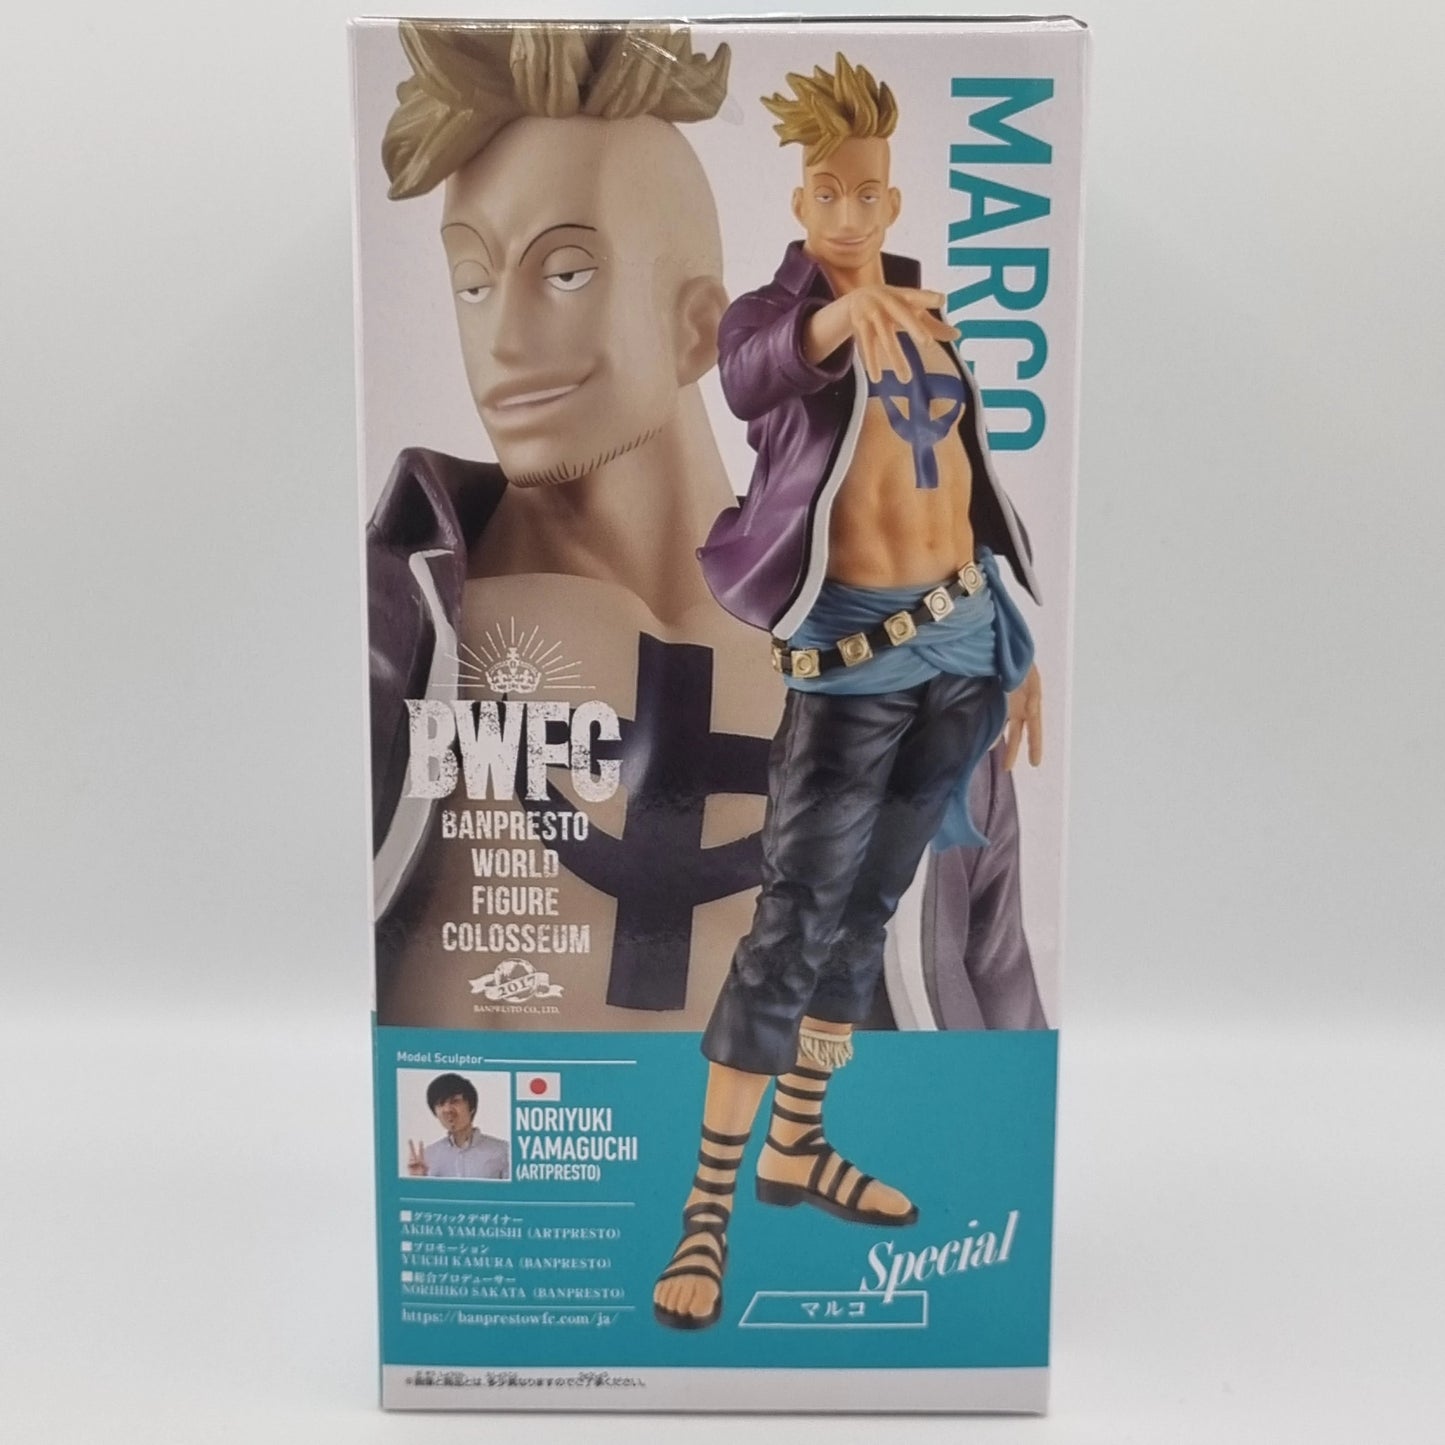 One Piece BWFC Banpresto World Figure Colosseum Marco PVC Figure